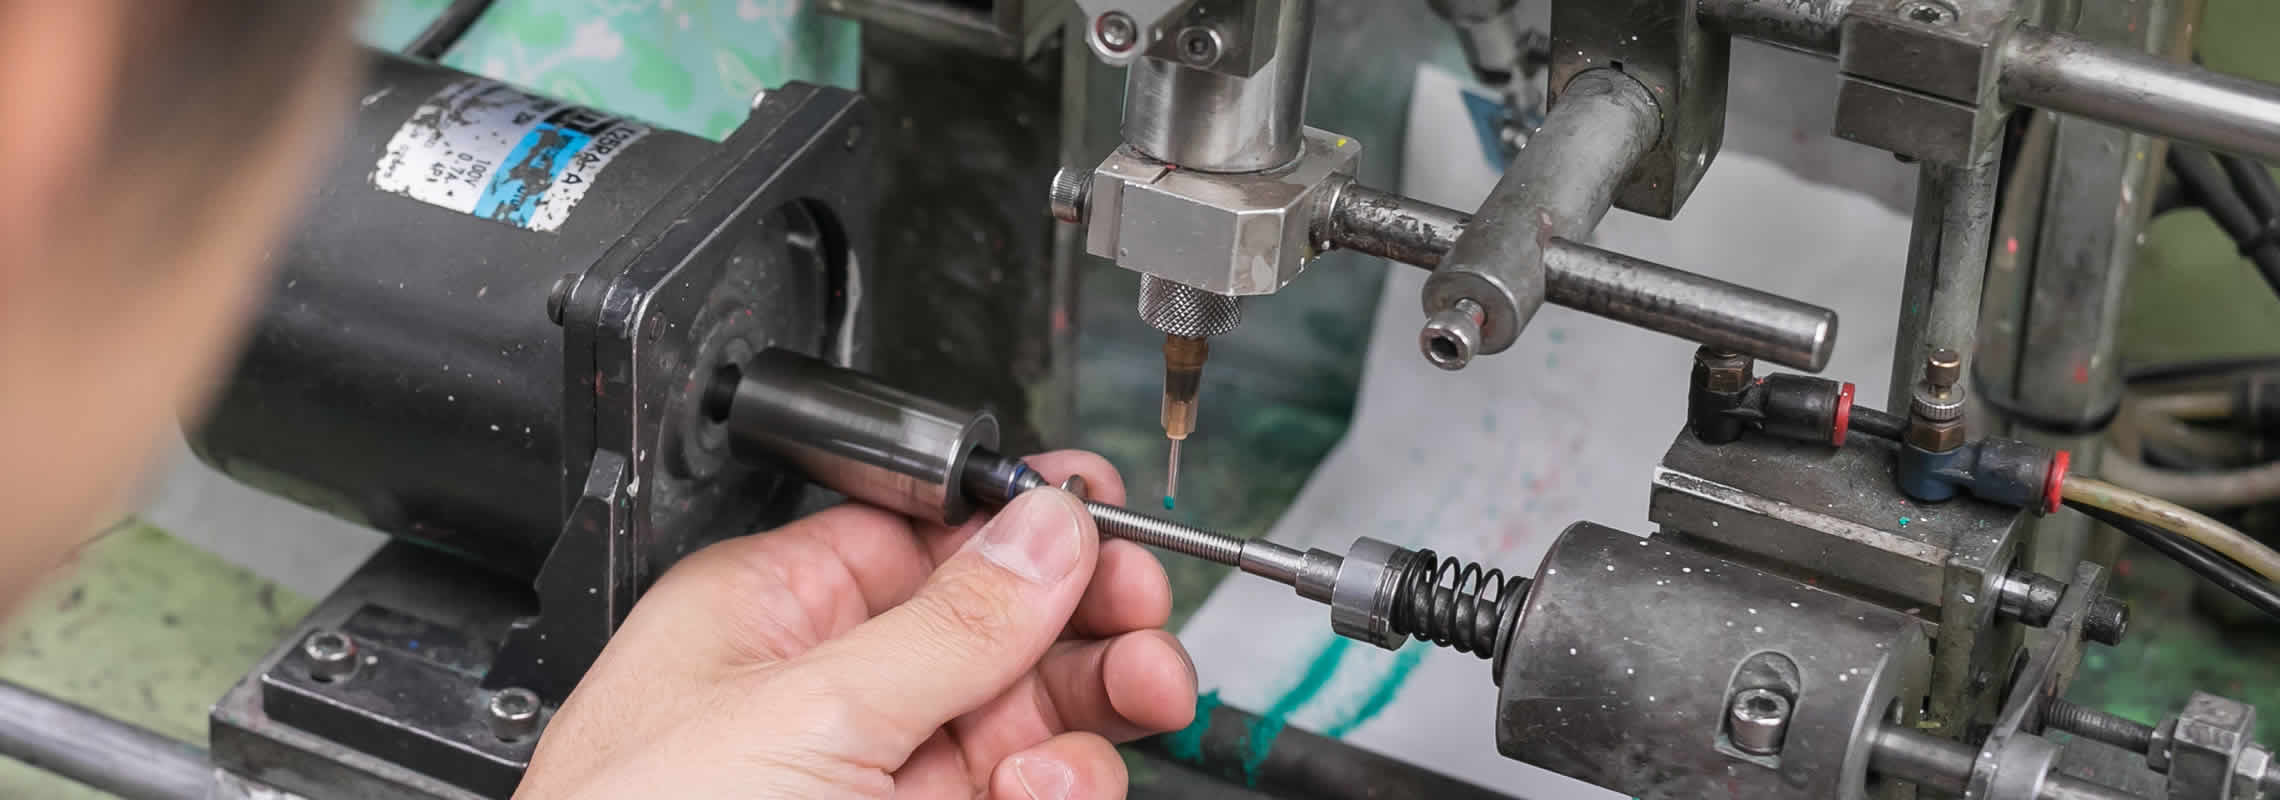 Loosening prevention coating of screws